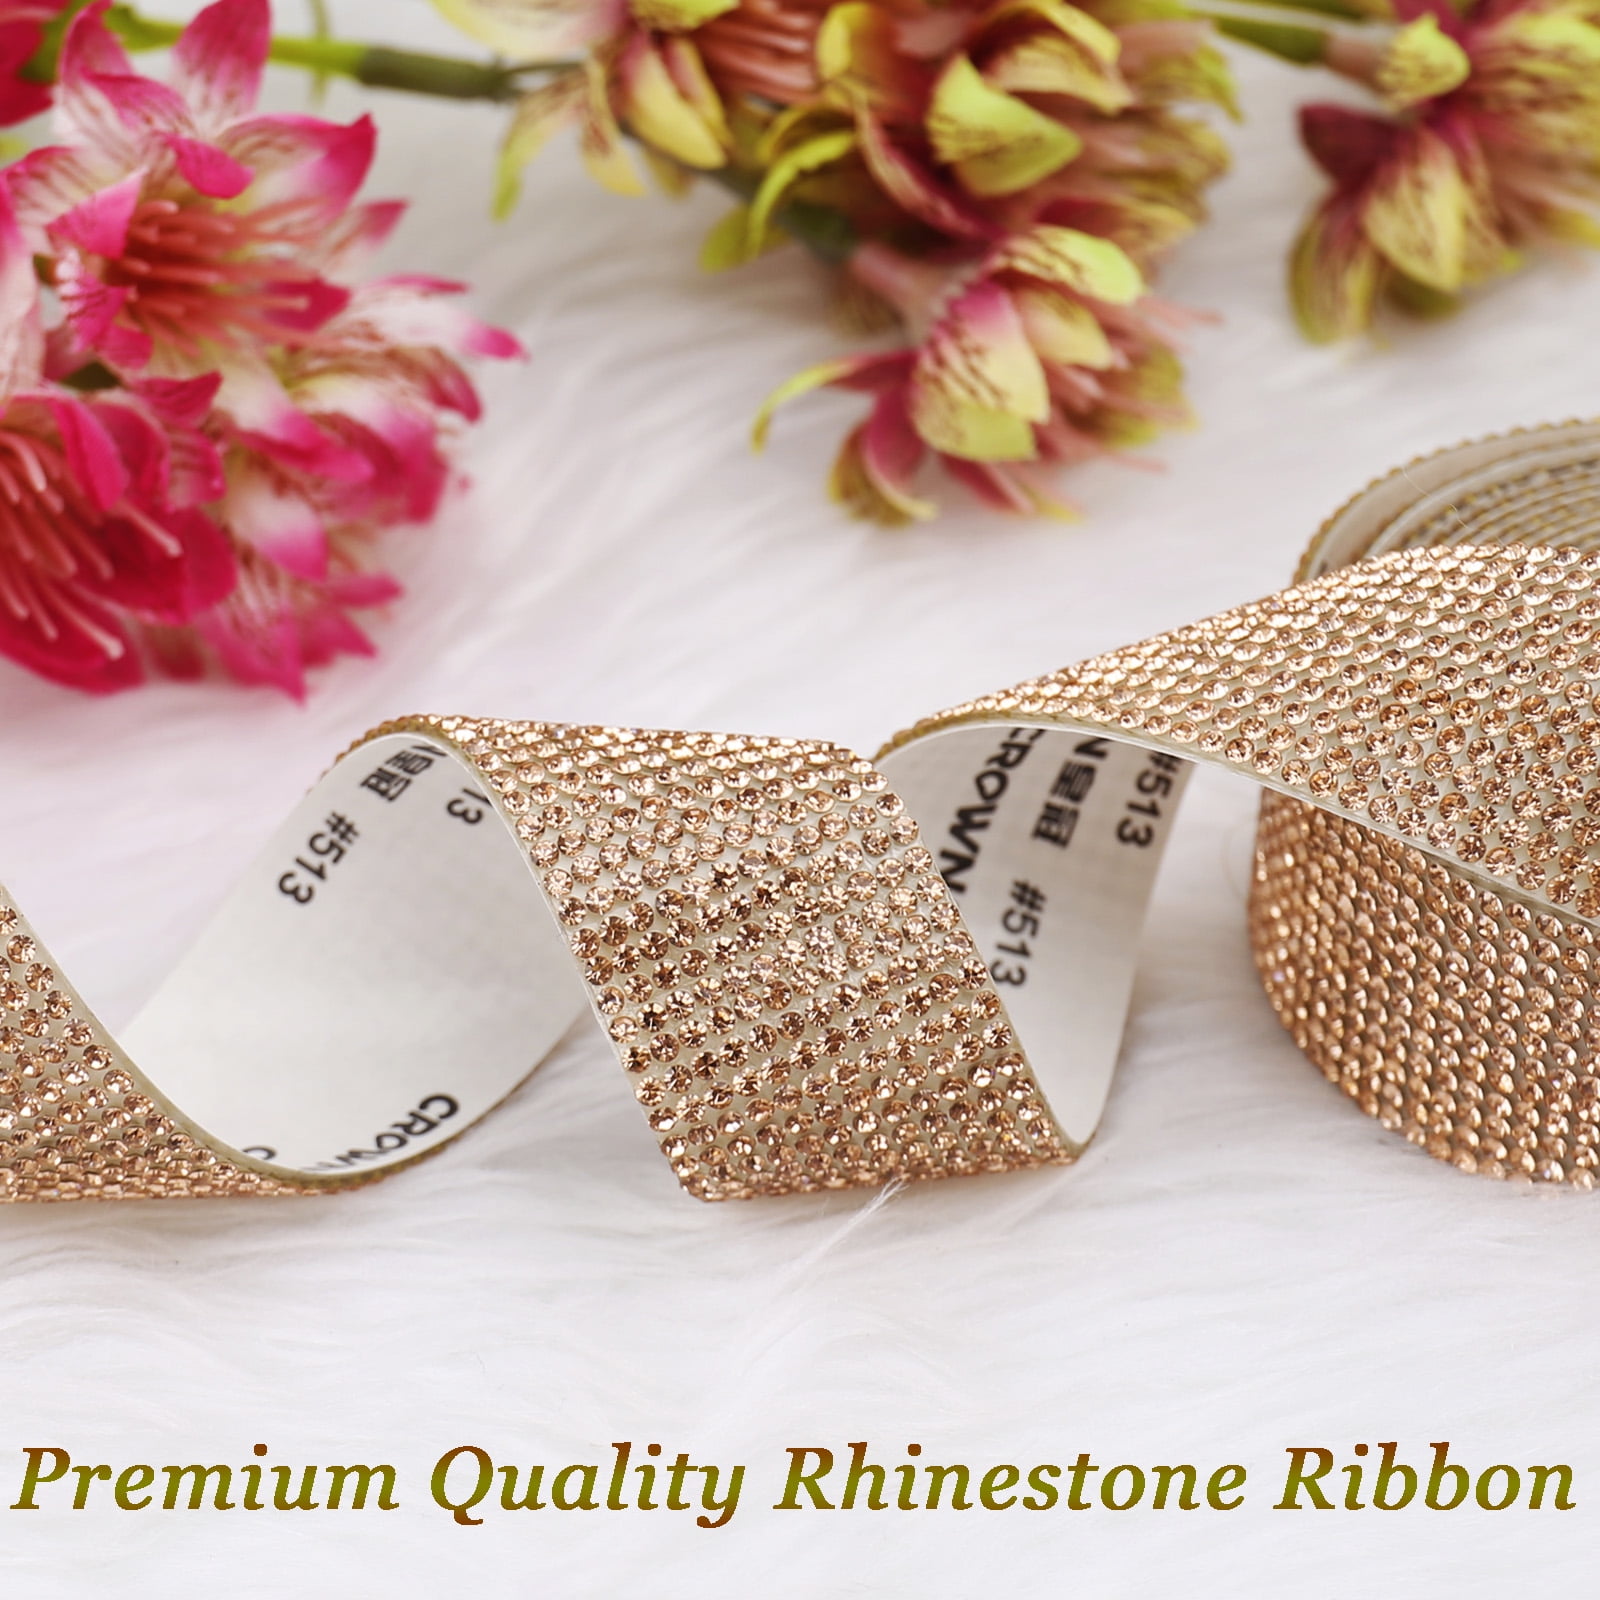 8 Rolls Rhinestone Ribbons Cludoo Self Adhesive Rhinestones for